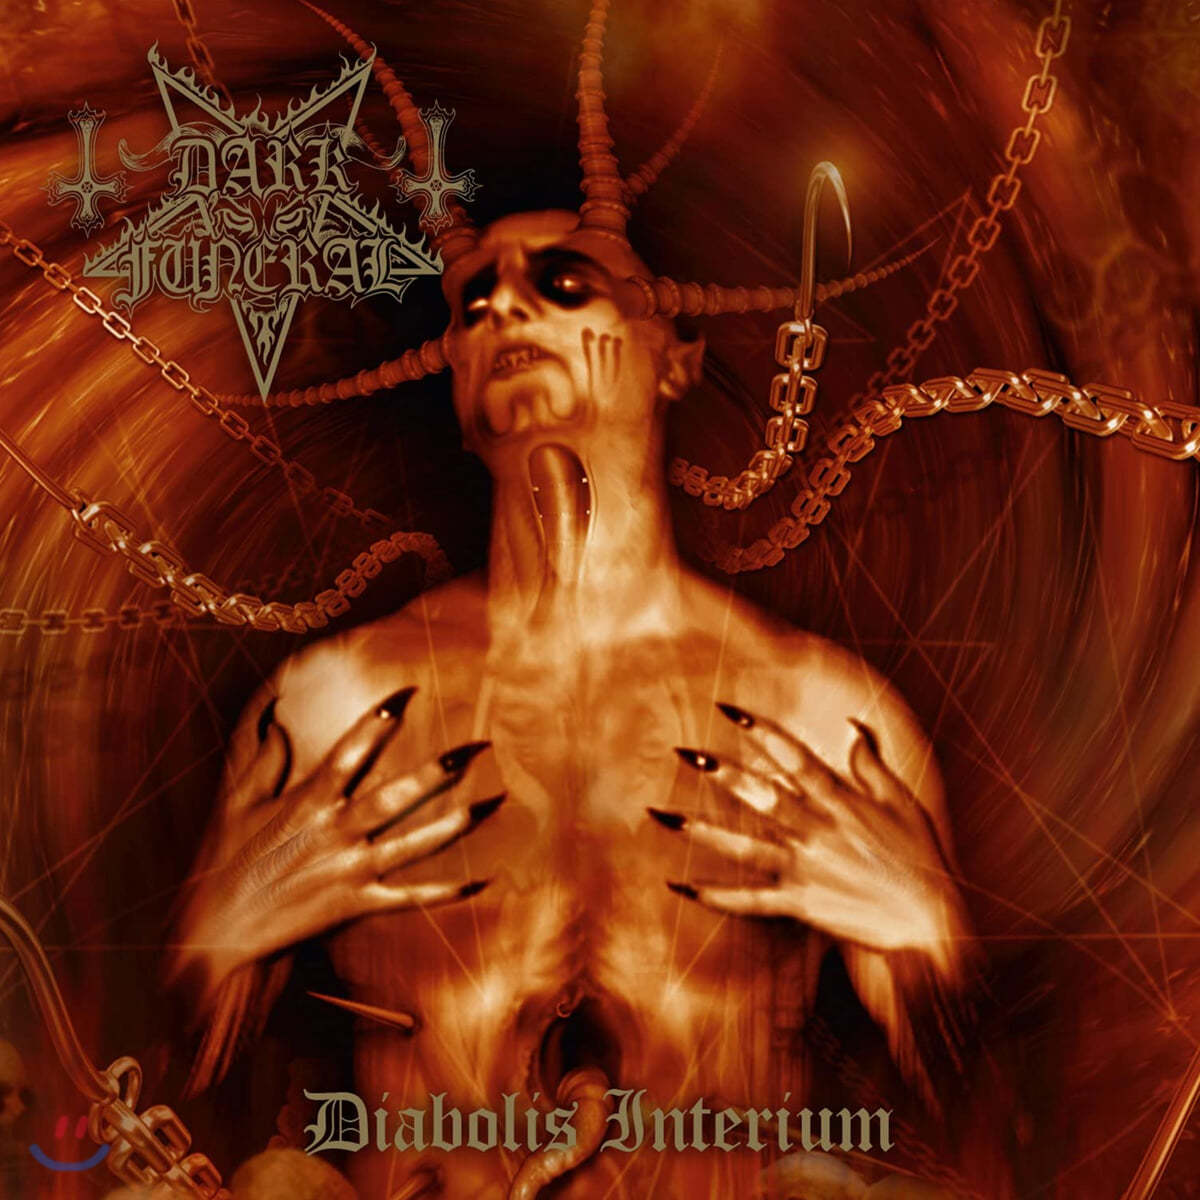 Dark Funeral (다크 퓨네럴) - Diabolis Interium